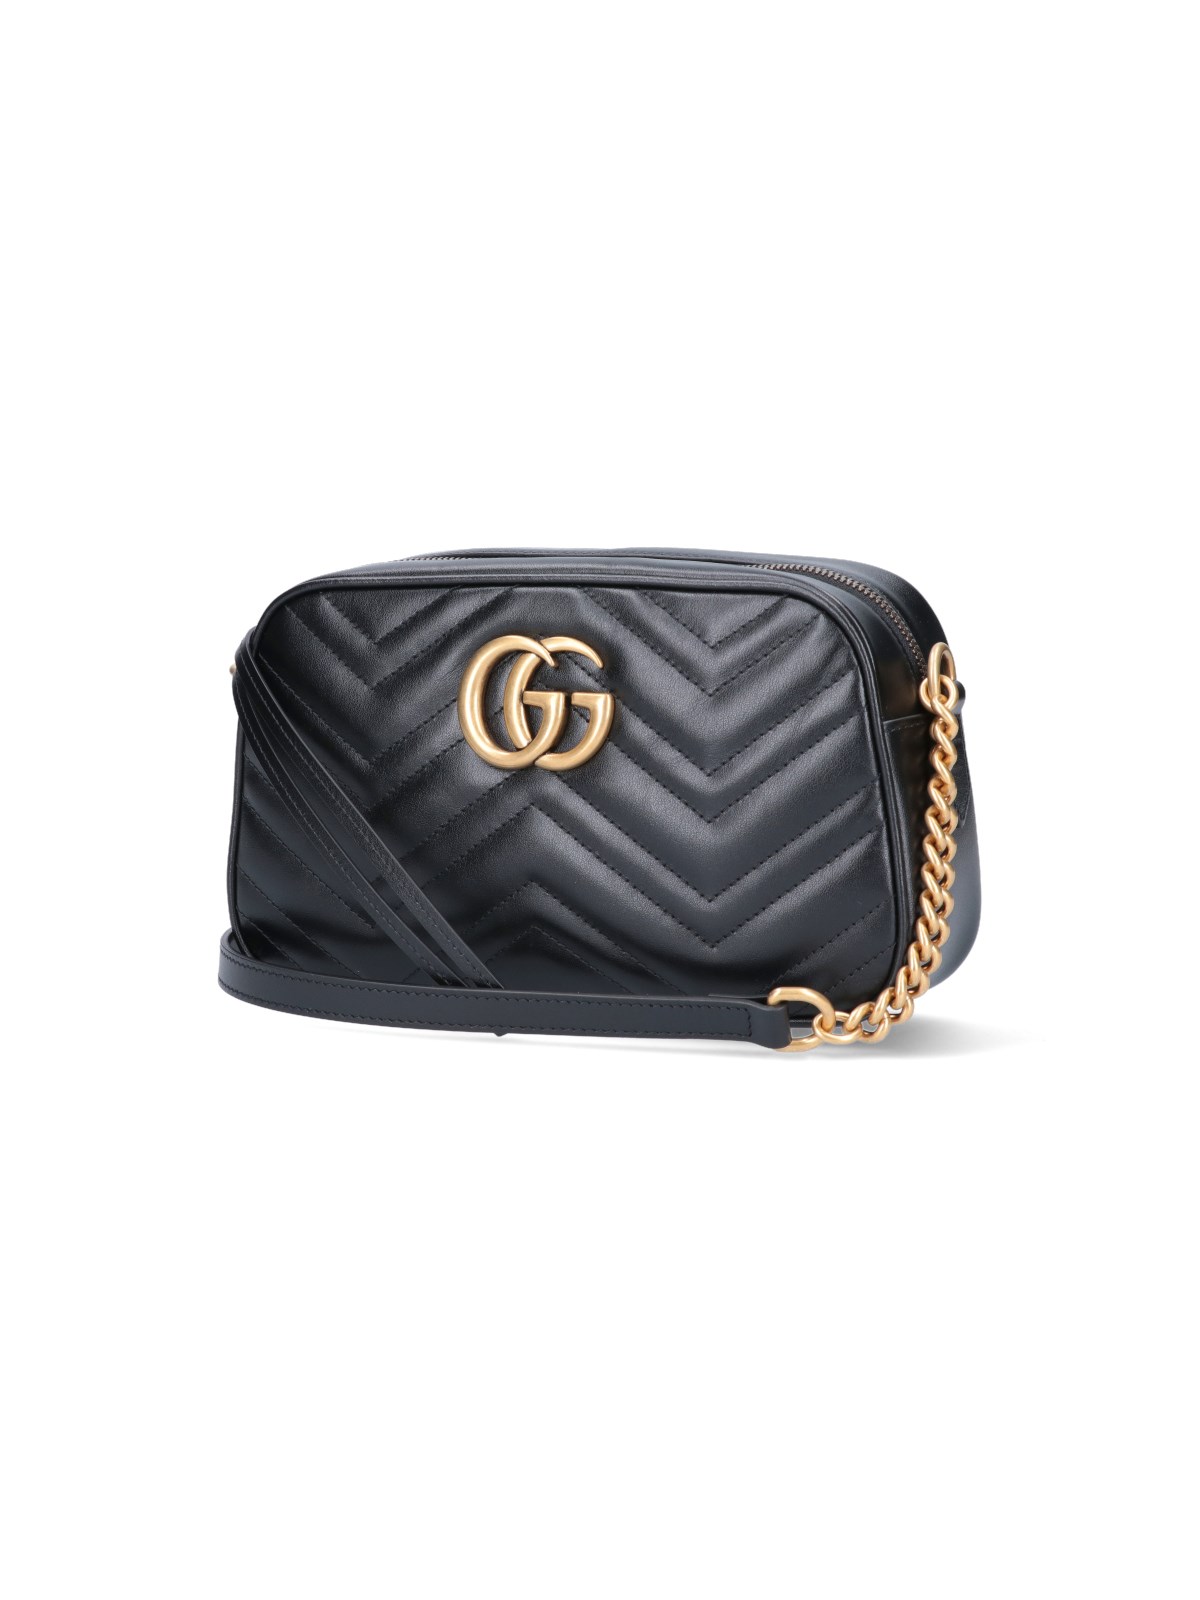 GUCCI CAMERA BAG CROSSBODY - Styles/Sizes Available | Gucci crossbody bag,  Bags, Gucci bag